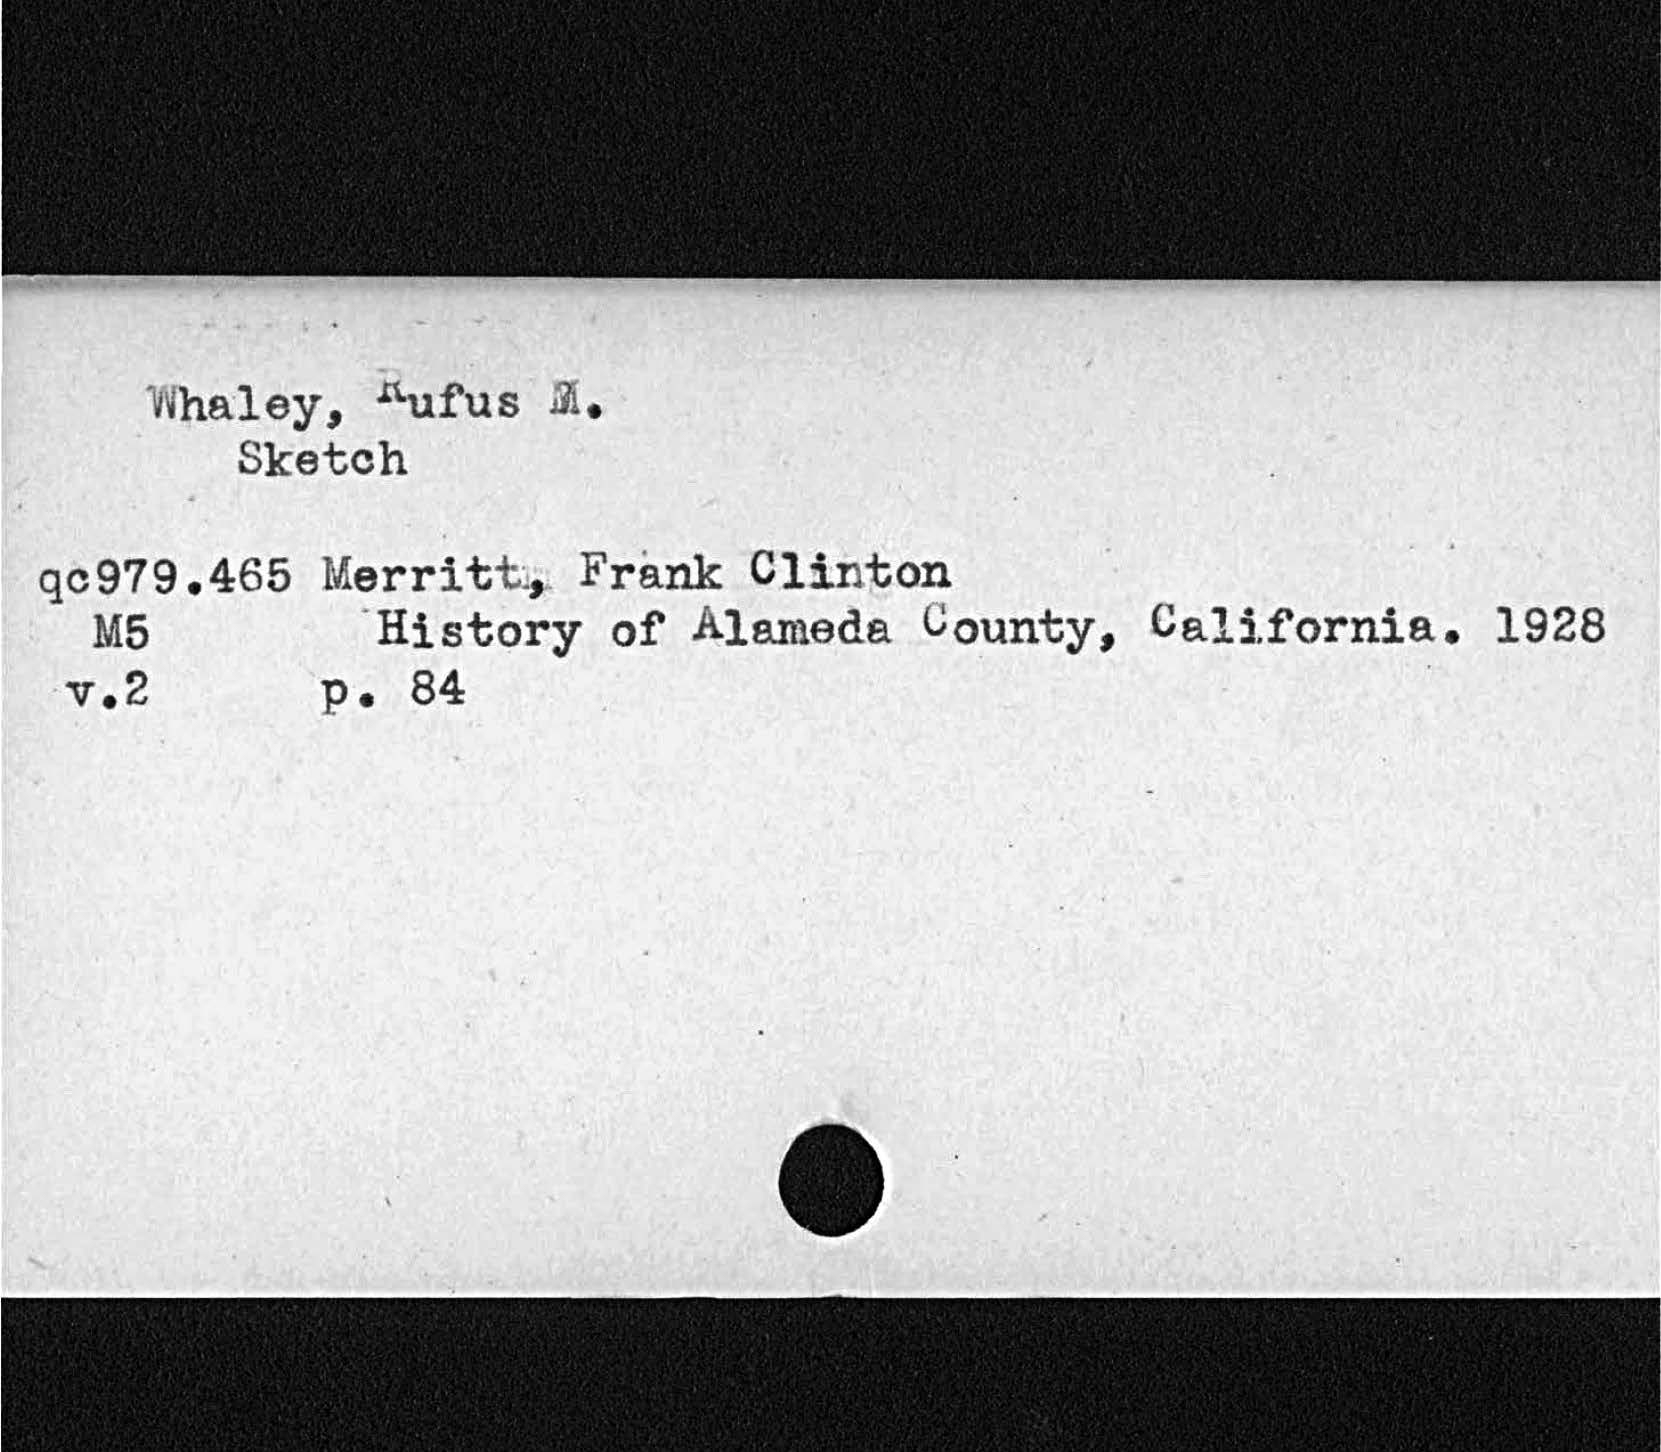 “Whaley, Rufus JlSketchMerritt Frank ClintonHistory of Alameda County, Californiav. 2 p. 84   qc979. 465  M5